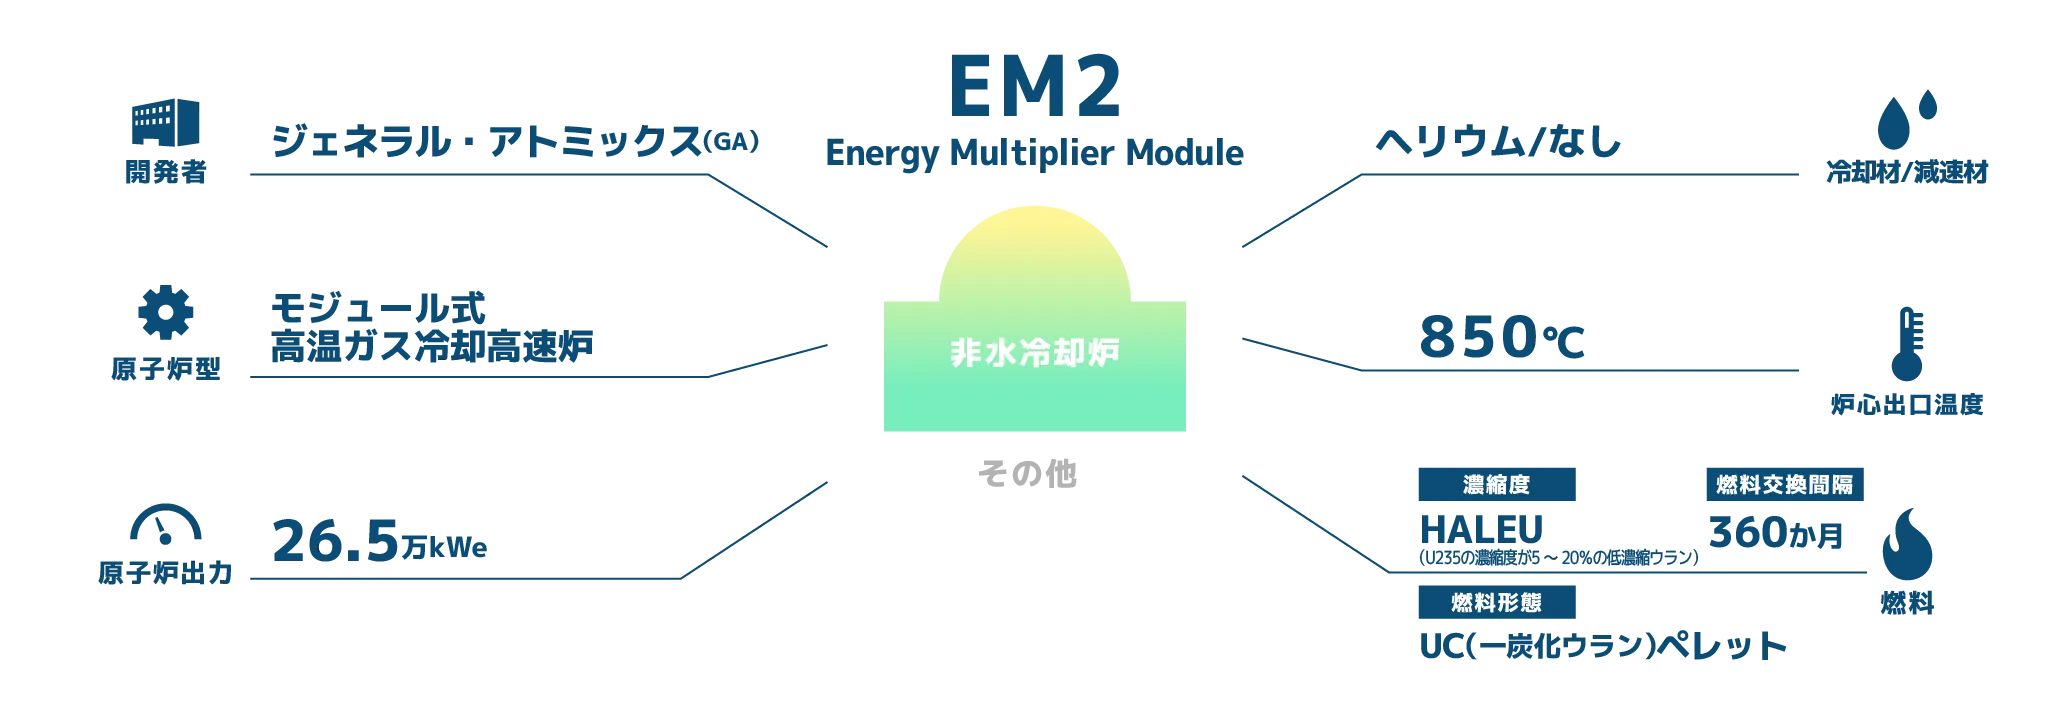 EM2 Energy Multiplier Module